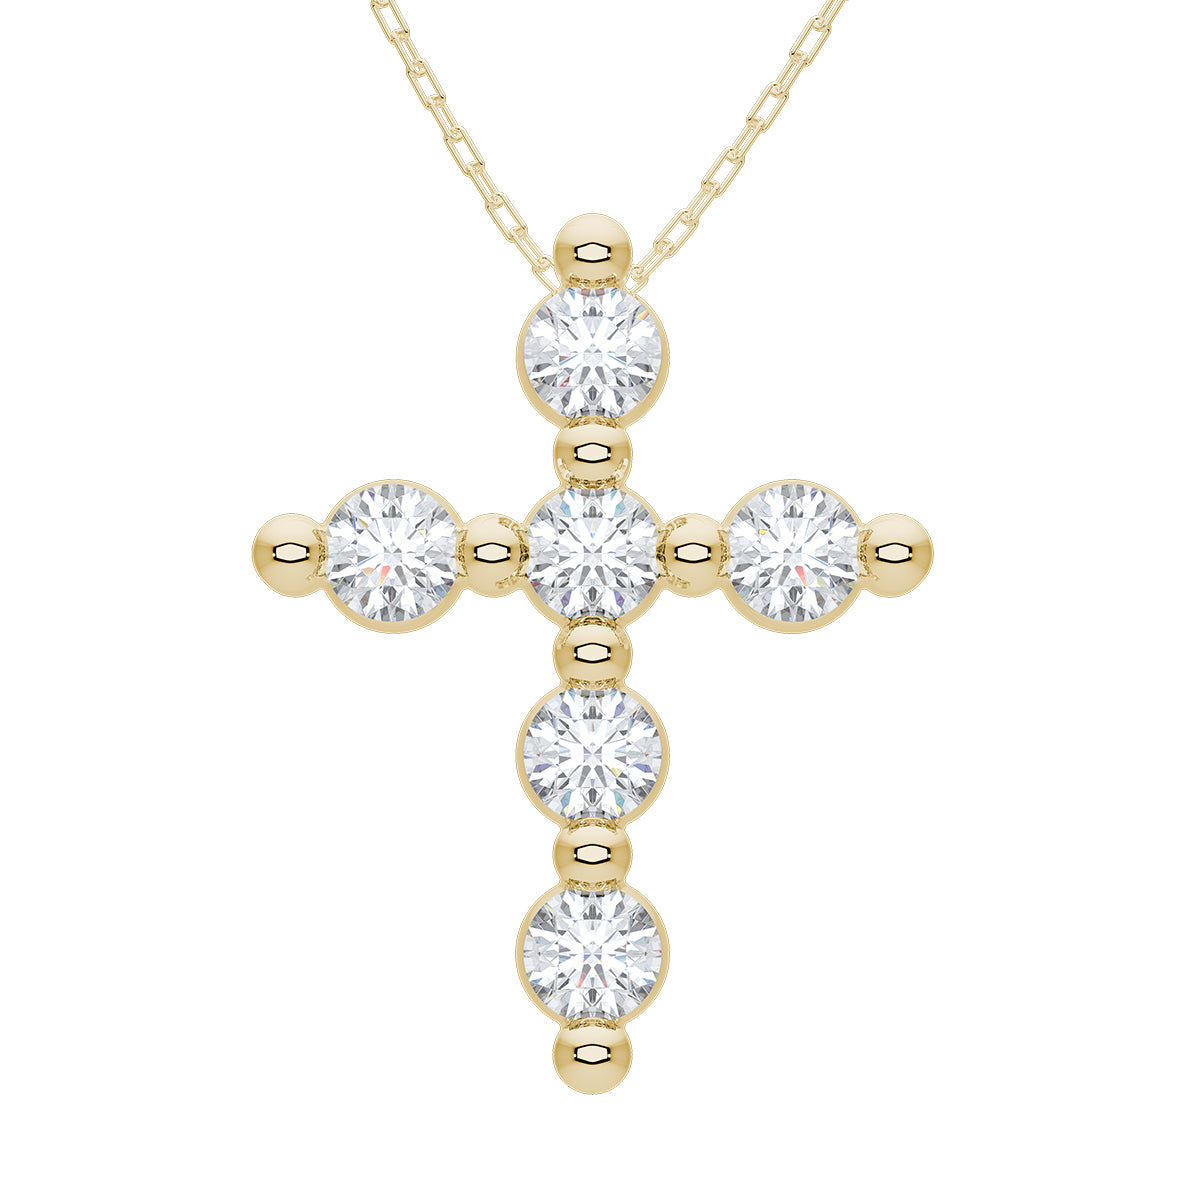 Posie Charlie Cloud® Floating Diamond Cross Necklace 0.21 ctw